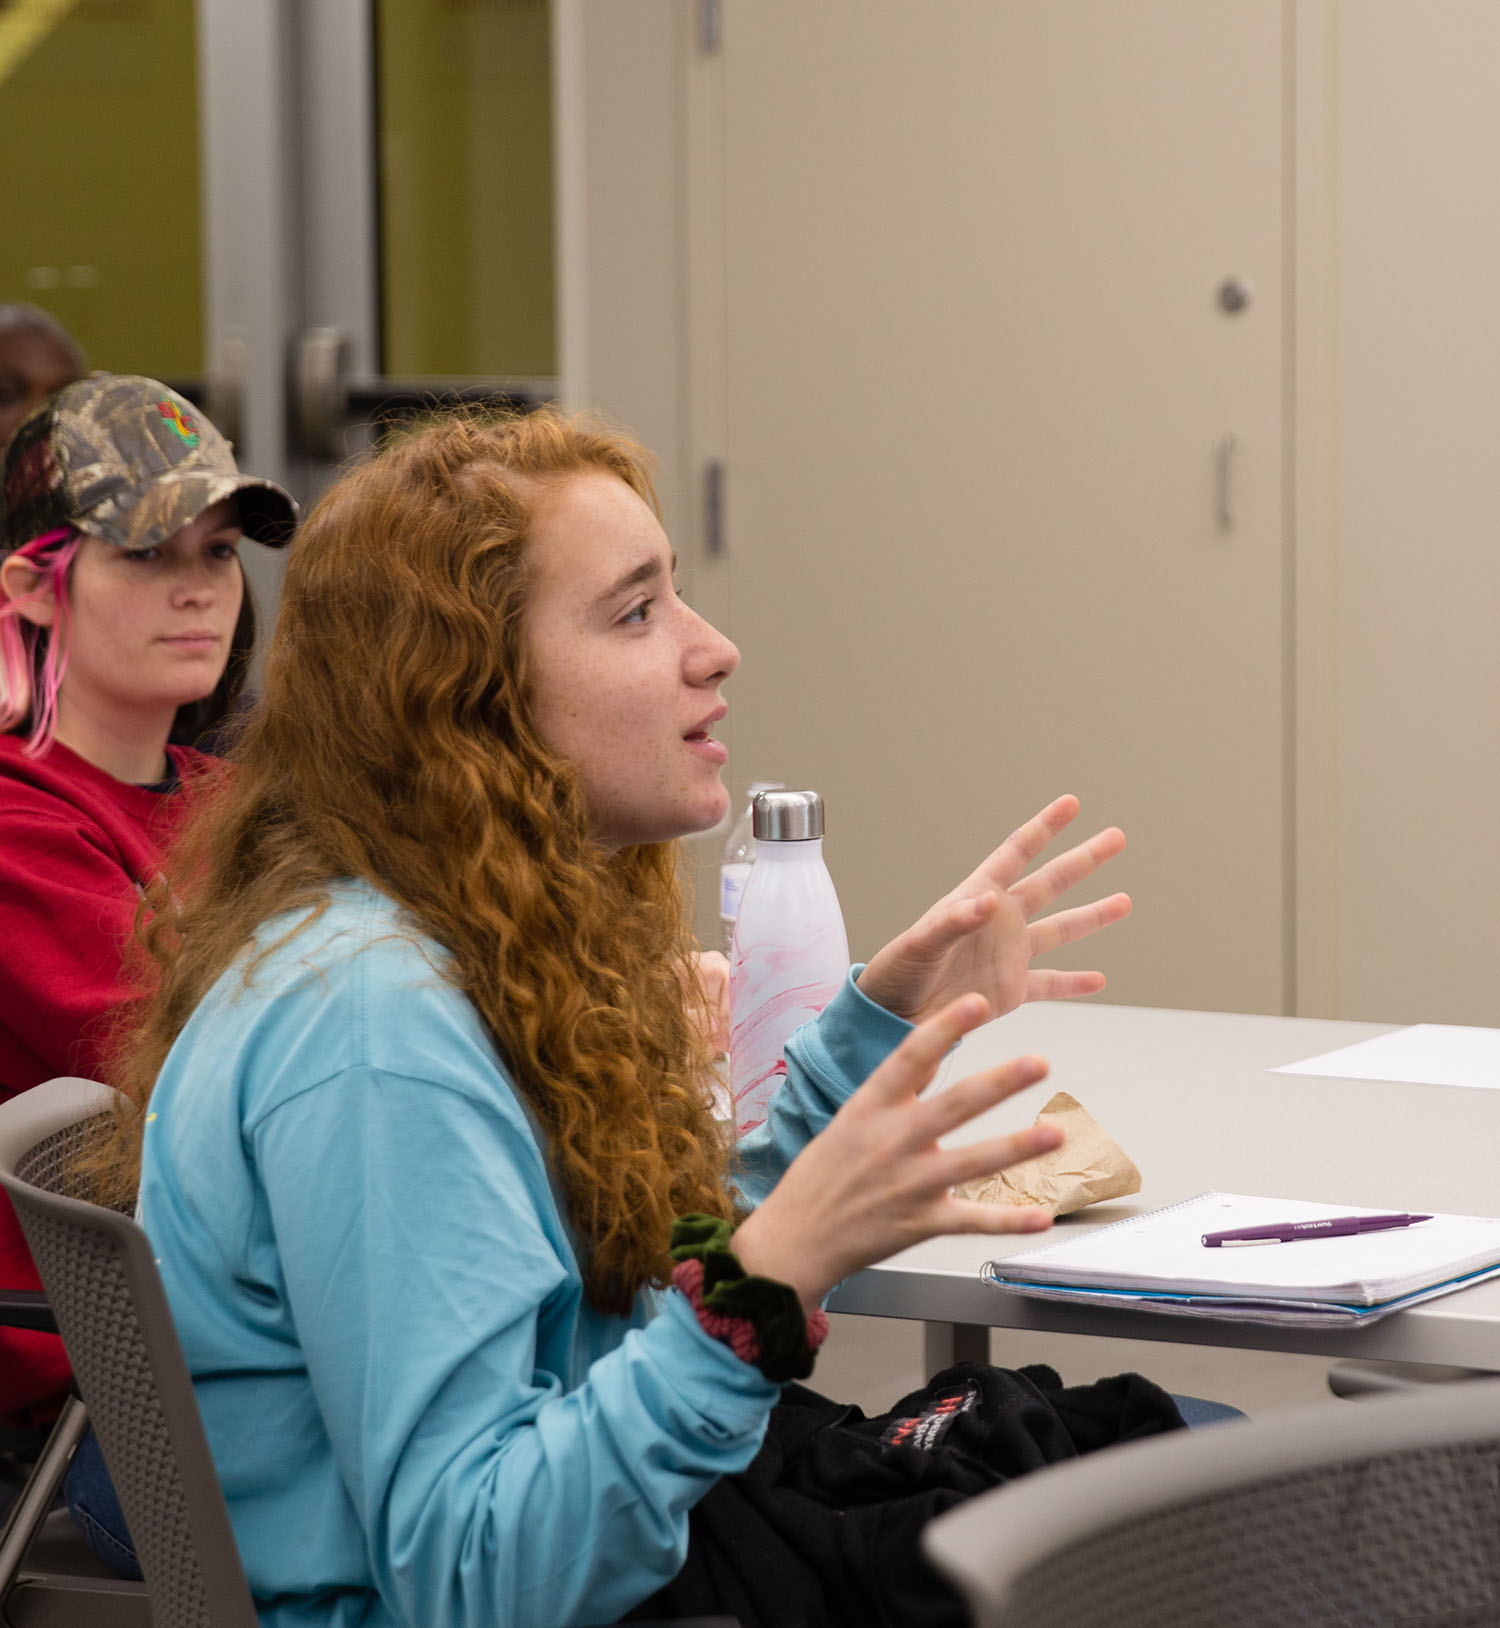 UA students raise questions about community engagement research.